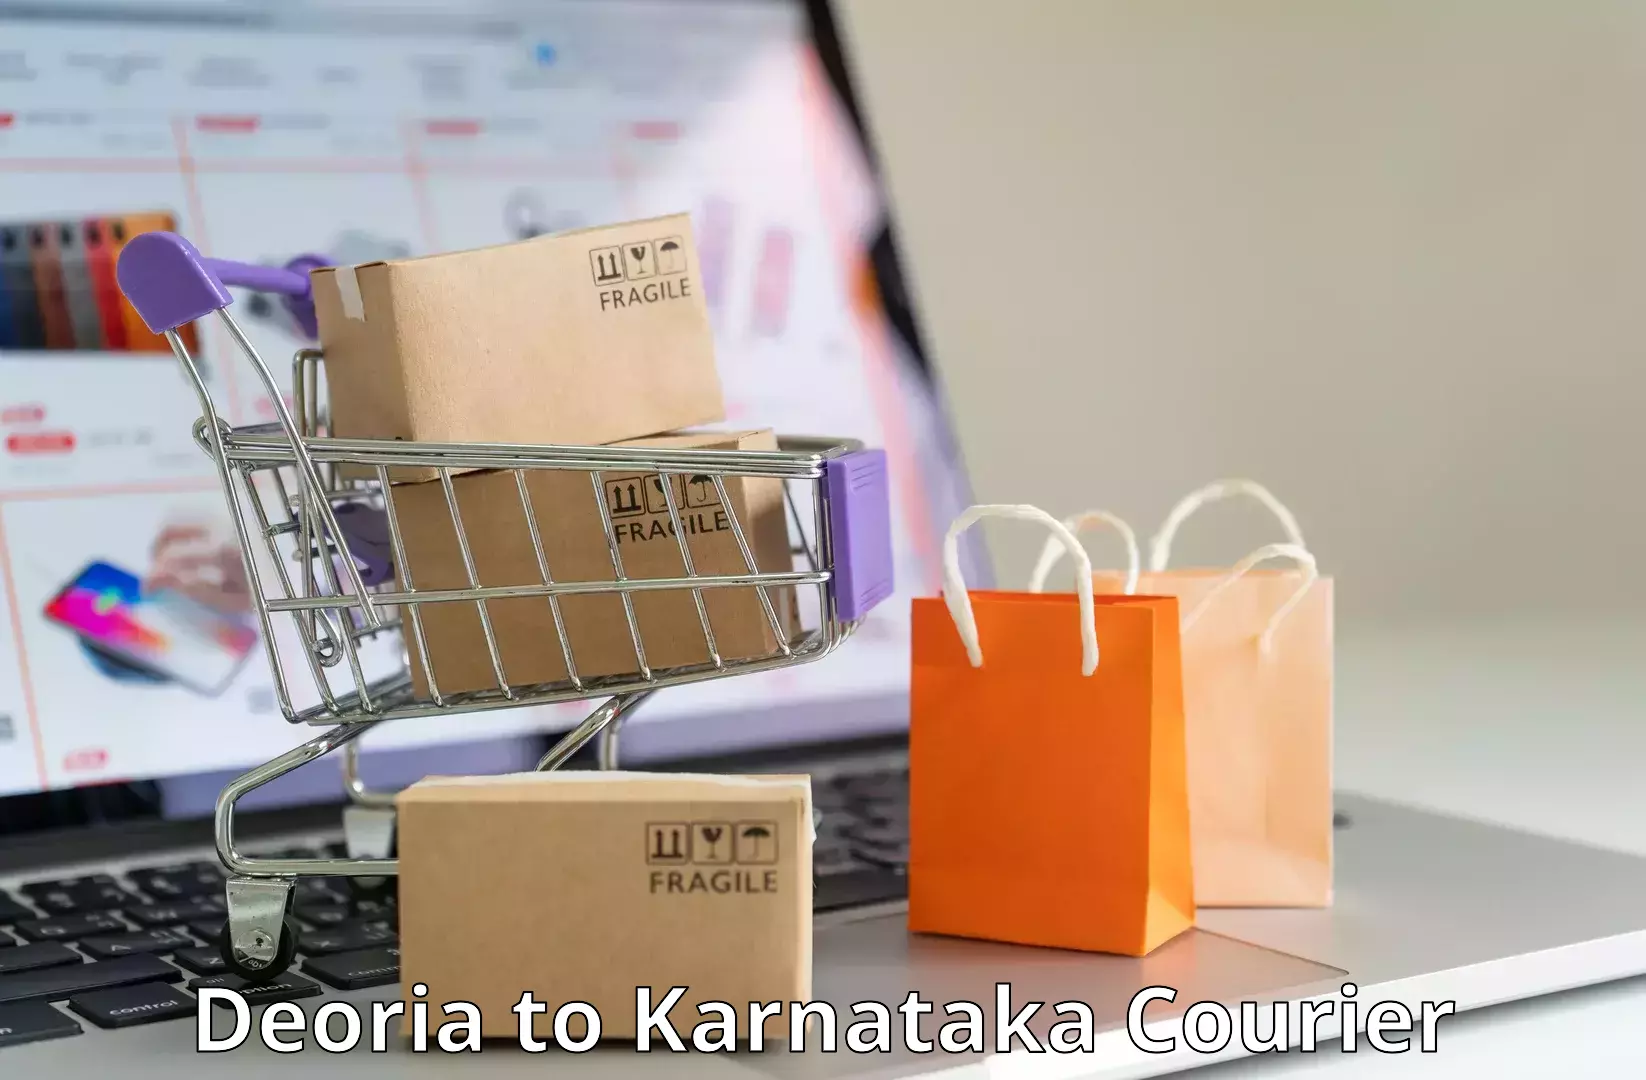 Lightweight parcel options Deoria to Mysore